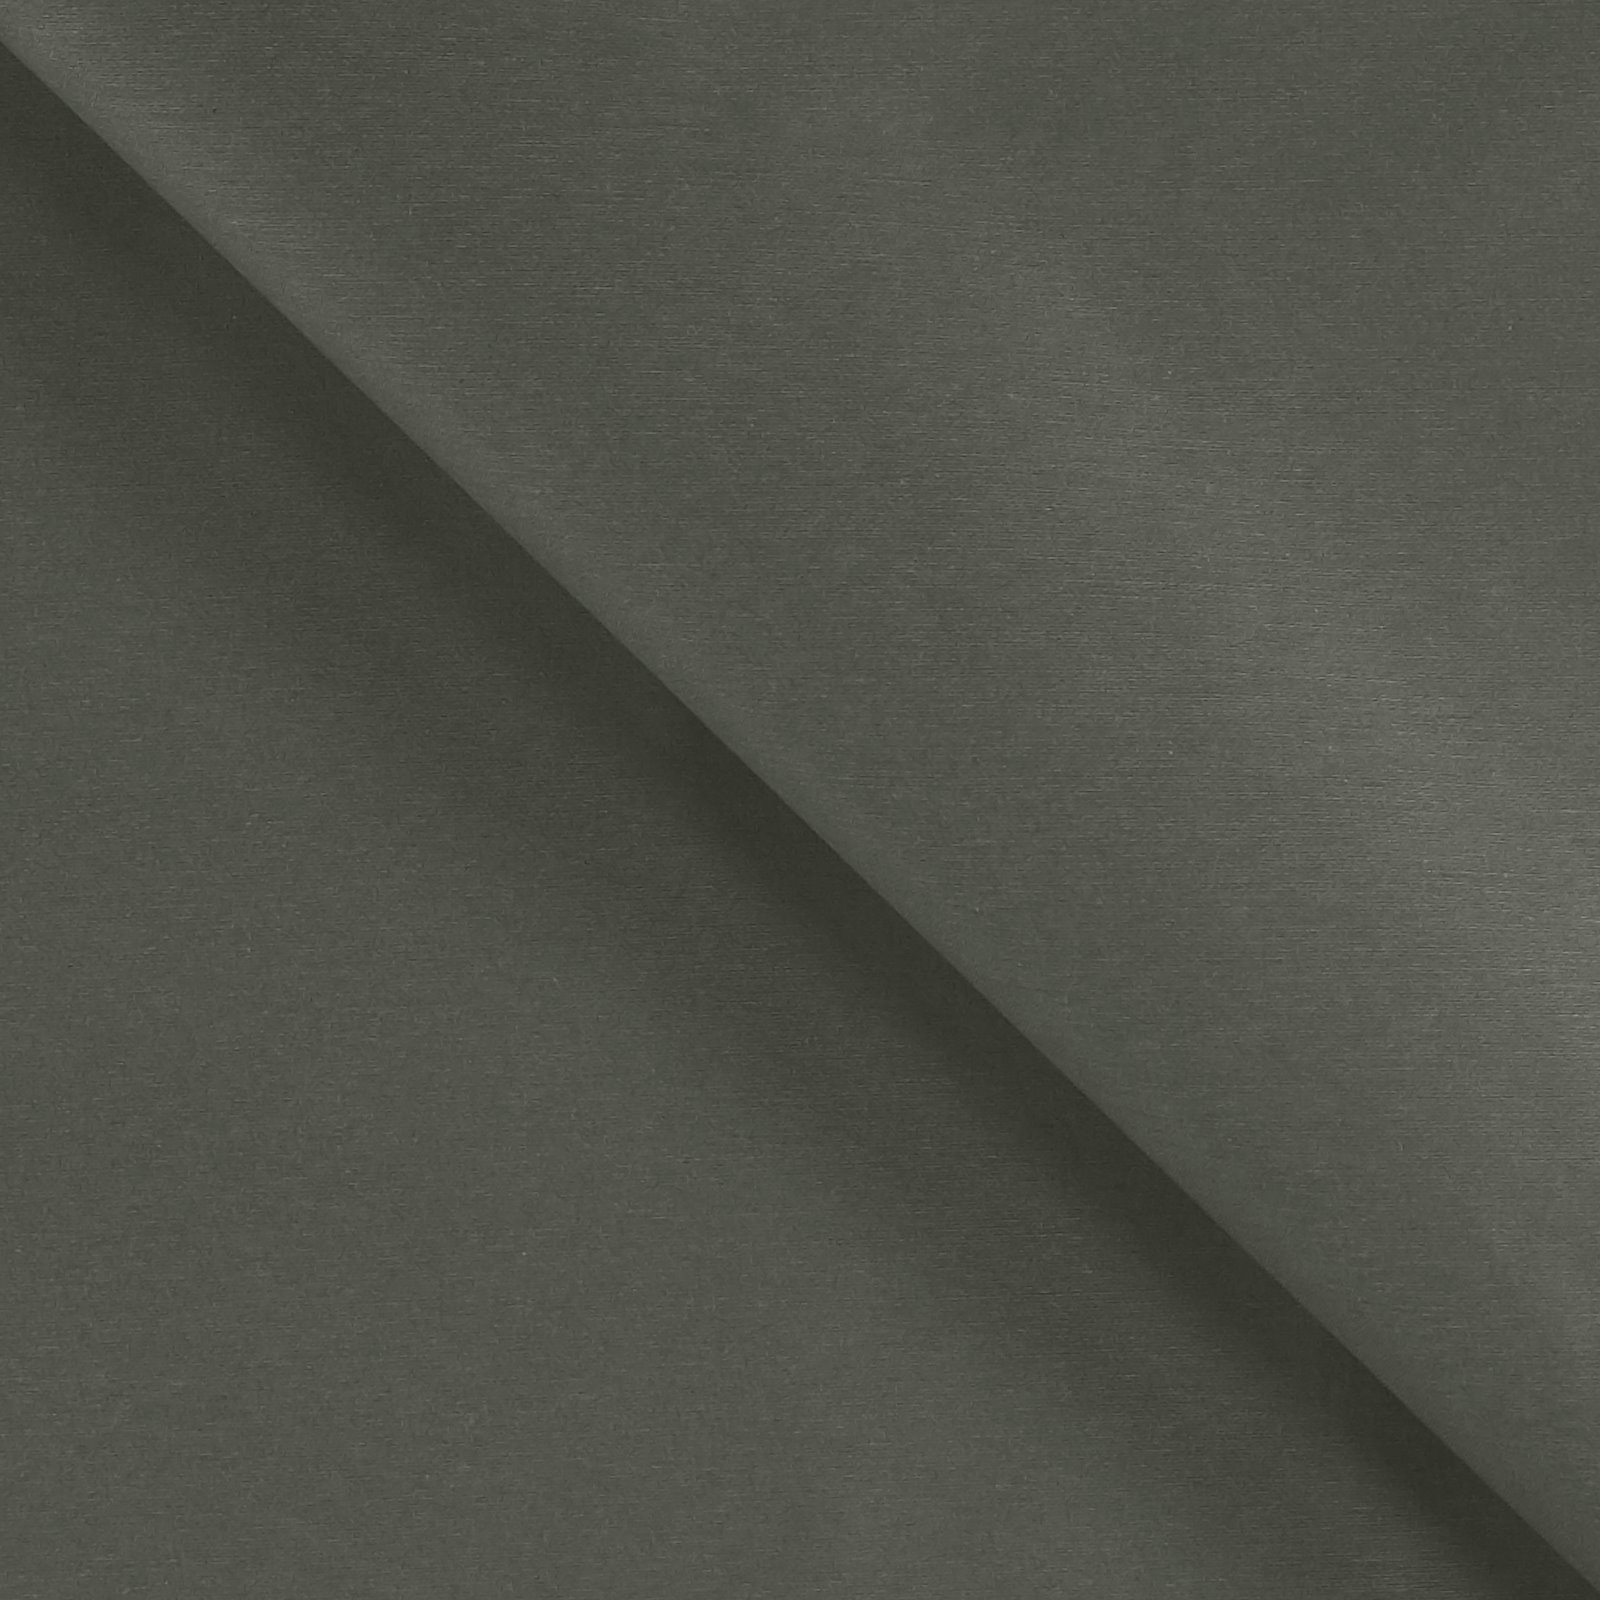 Woven oilcloth dark grey 870214_pack